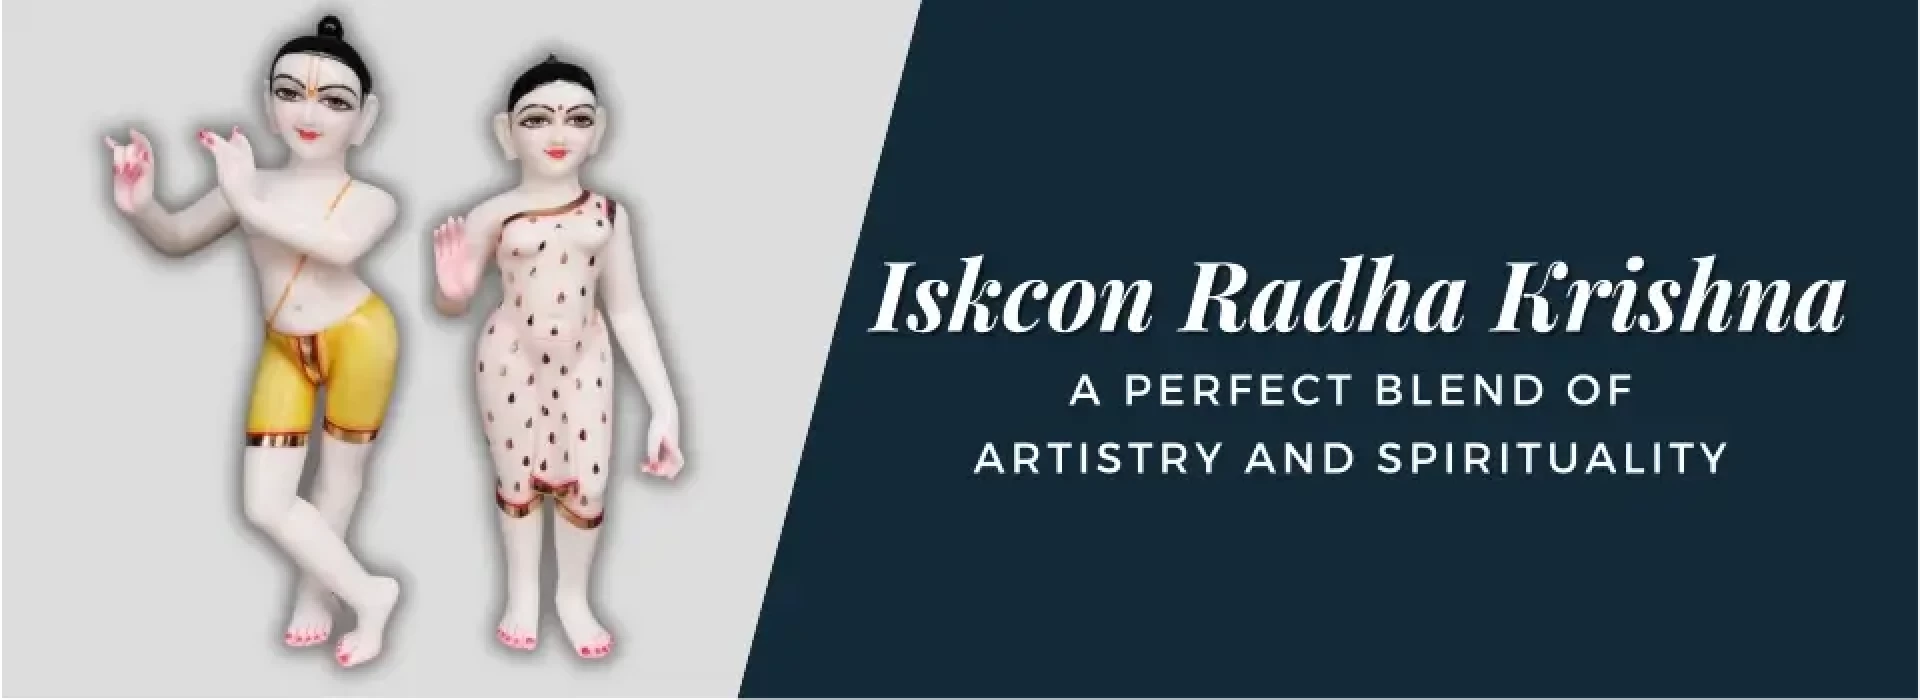 Iskcon Radha Krishna Statue: A Perfect Blend of Artistry and Spirituality.